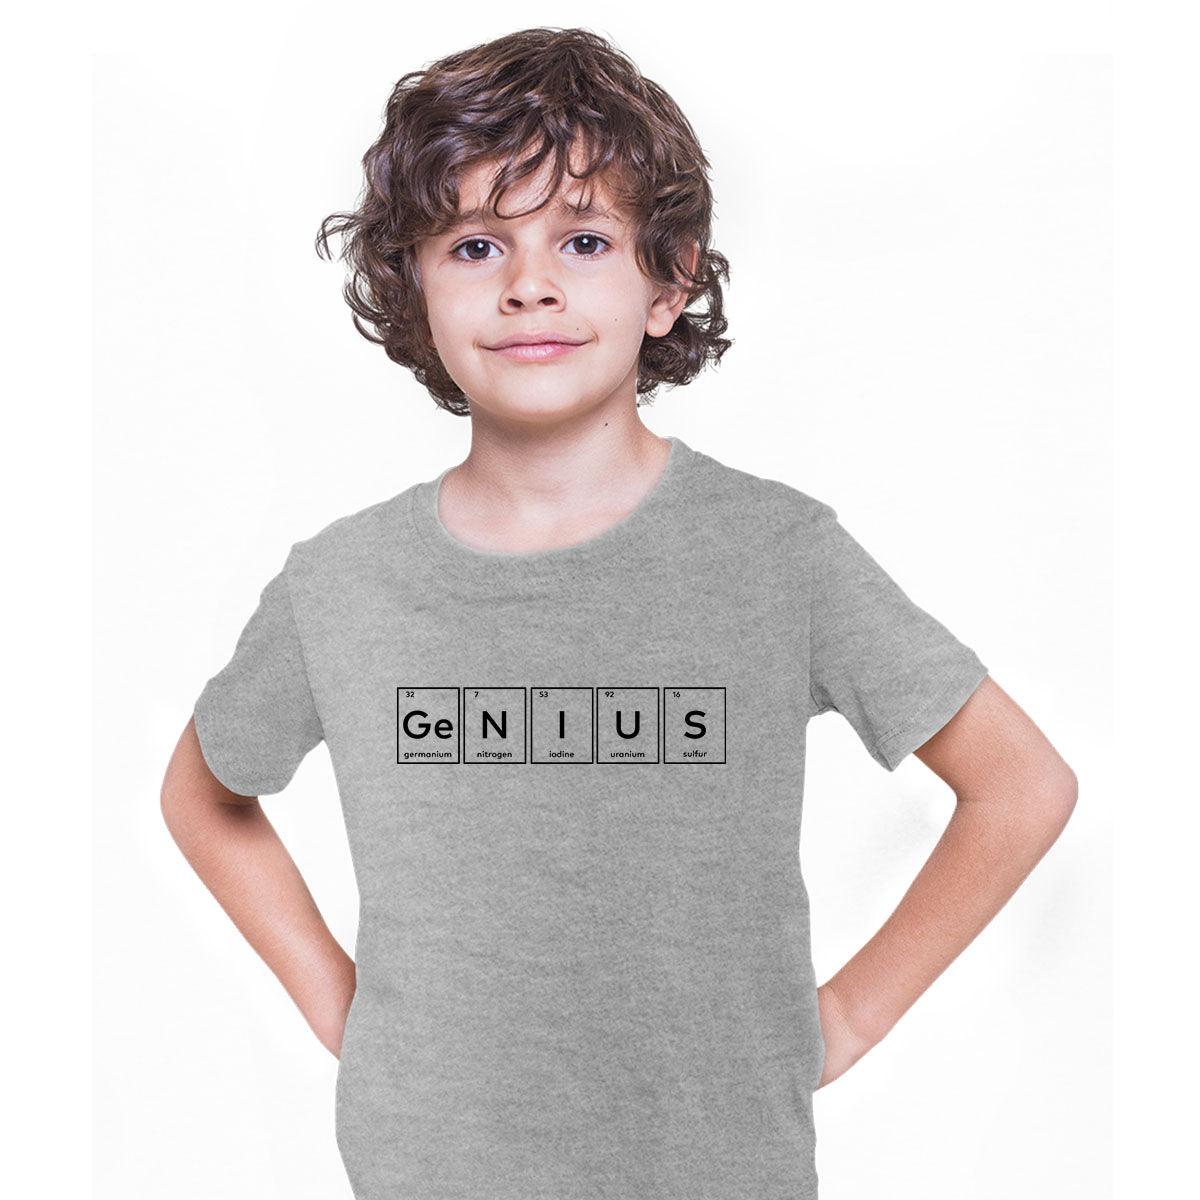 Genius Kids Funny T-Shirt Novelty Joke Tee Rude Gift Him Dad Birthday Slogan T-shirt for Kids - Kuzi Tees